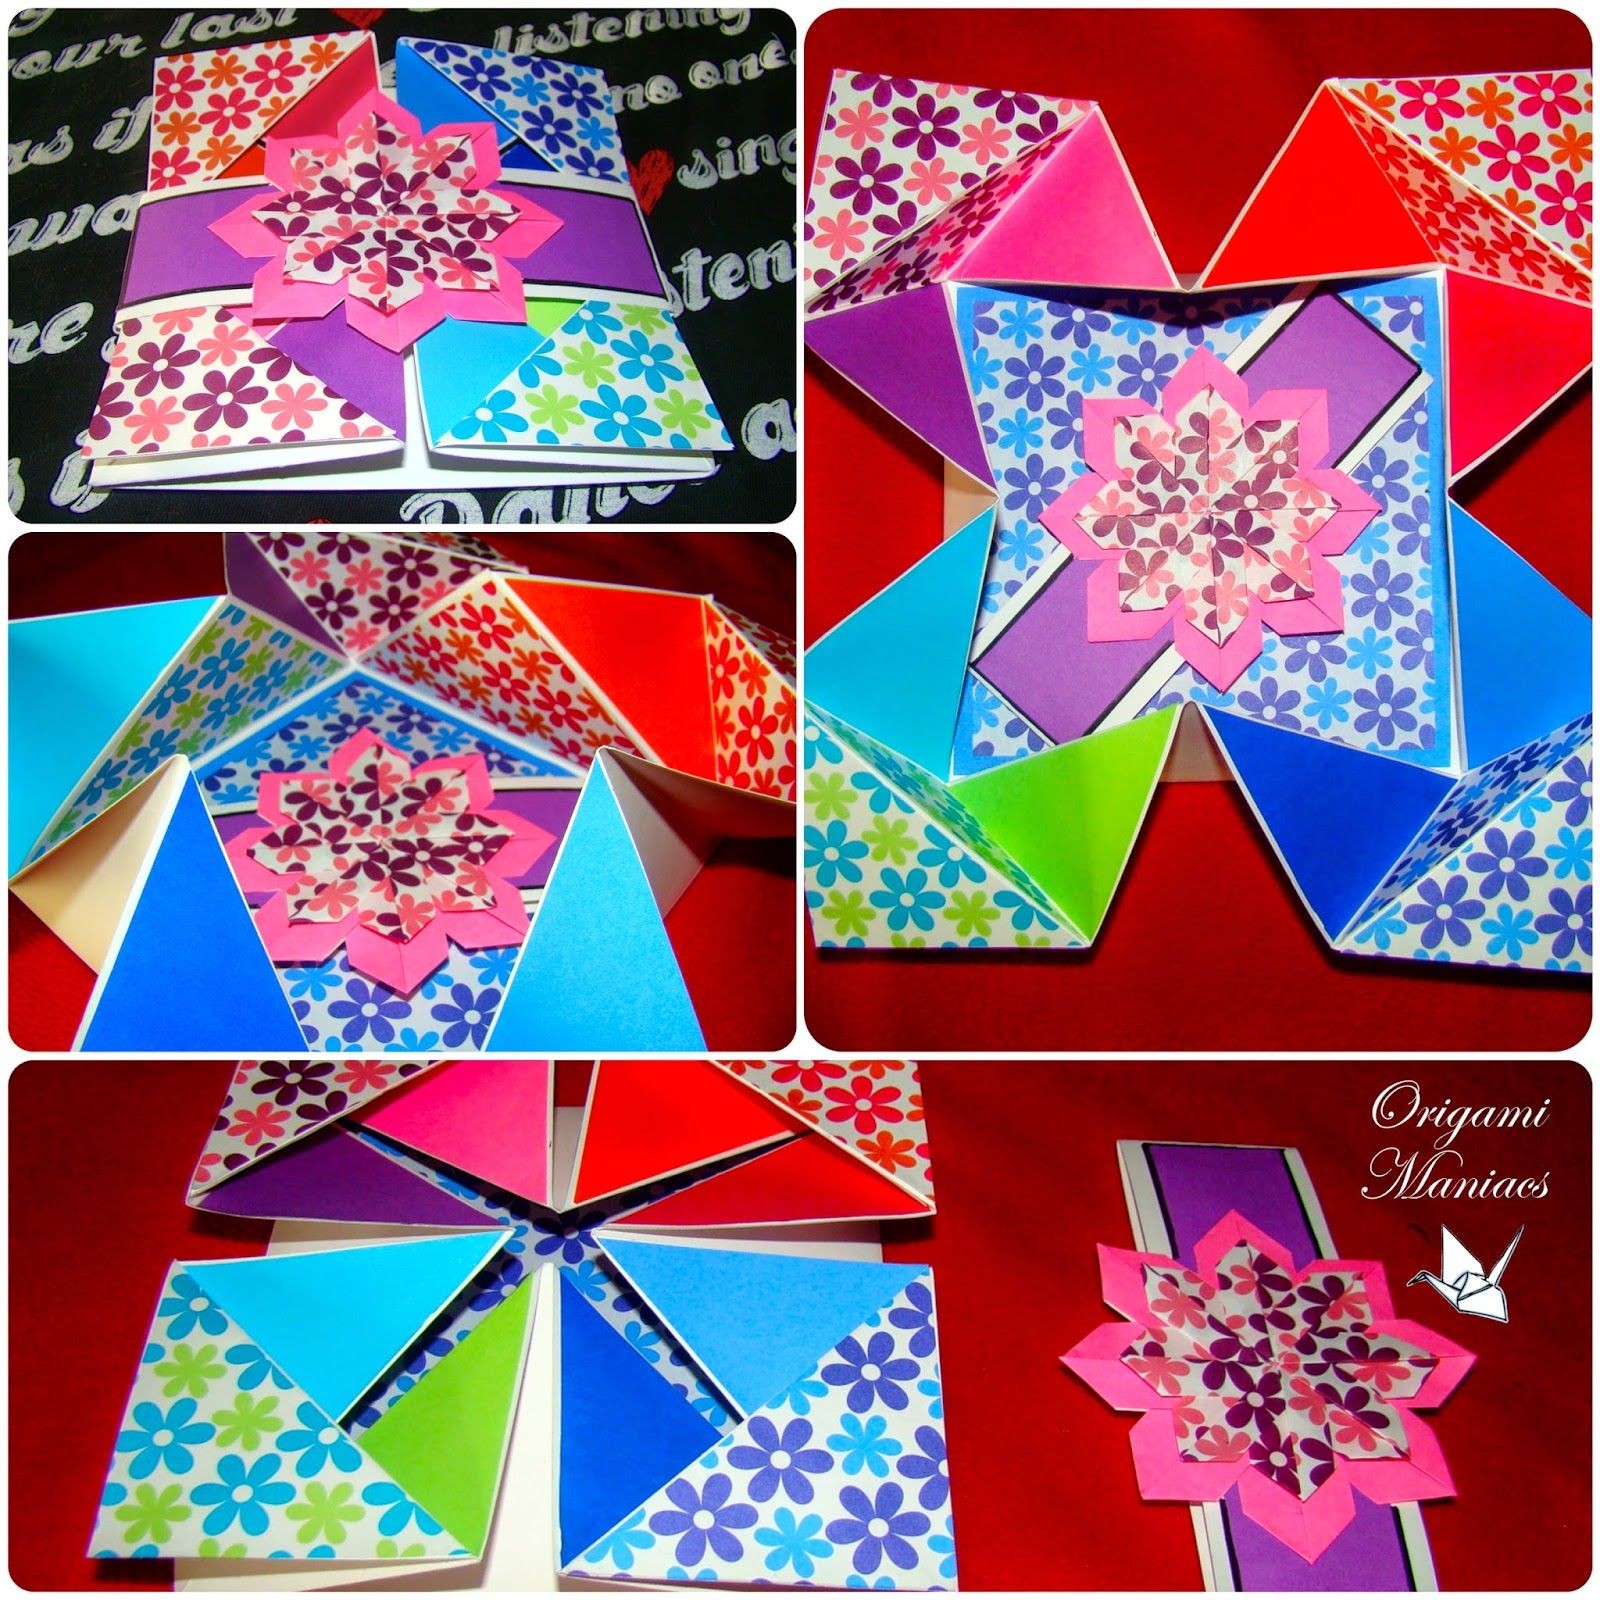 Windmill Papercraft origami Maniacs origami Card with the Windmill Base Tarjeta De